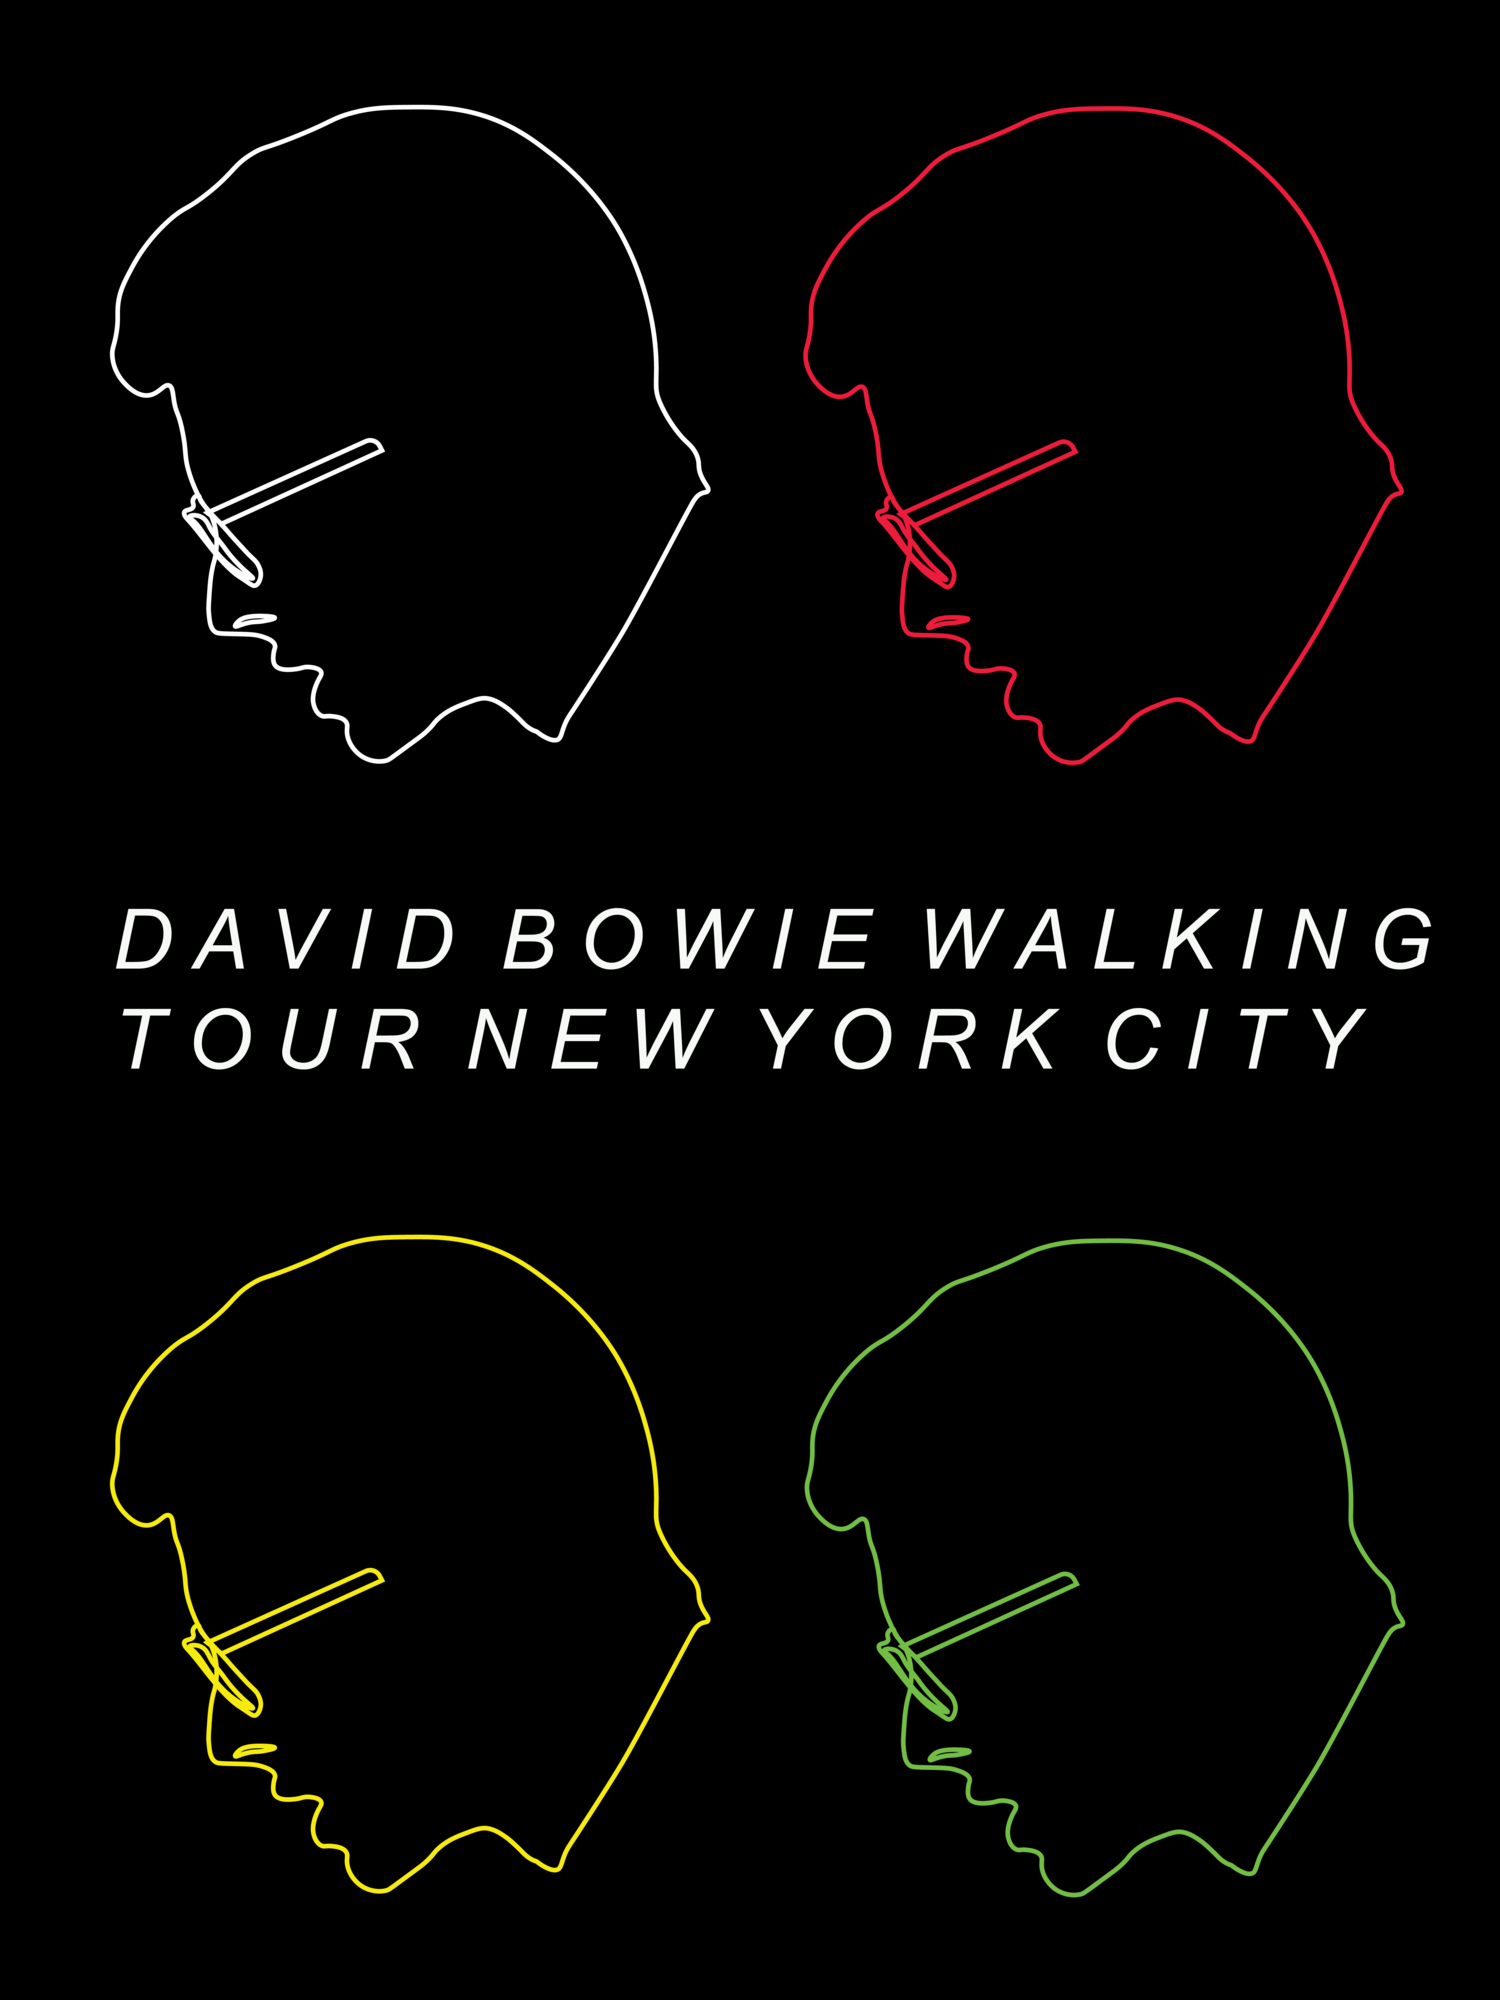 DAVID BOWIE WALKING TOUR NEW YORK CITY